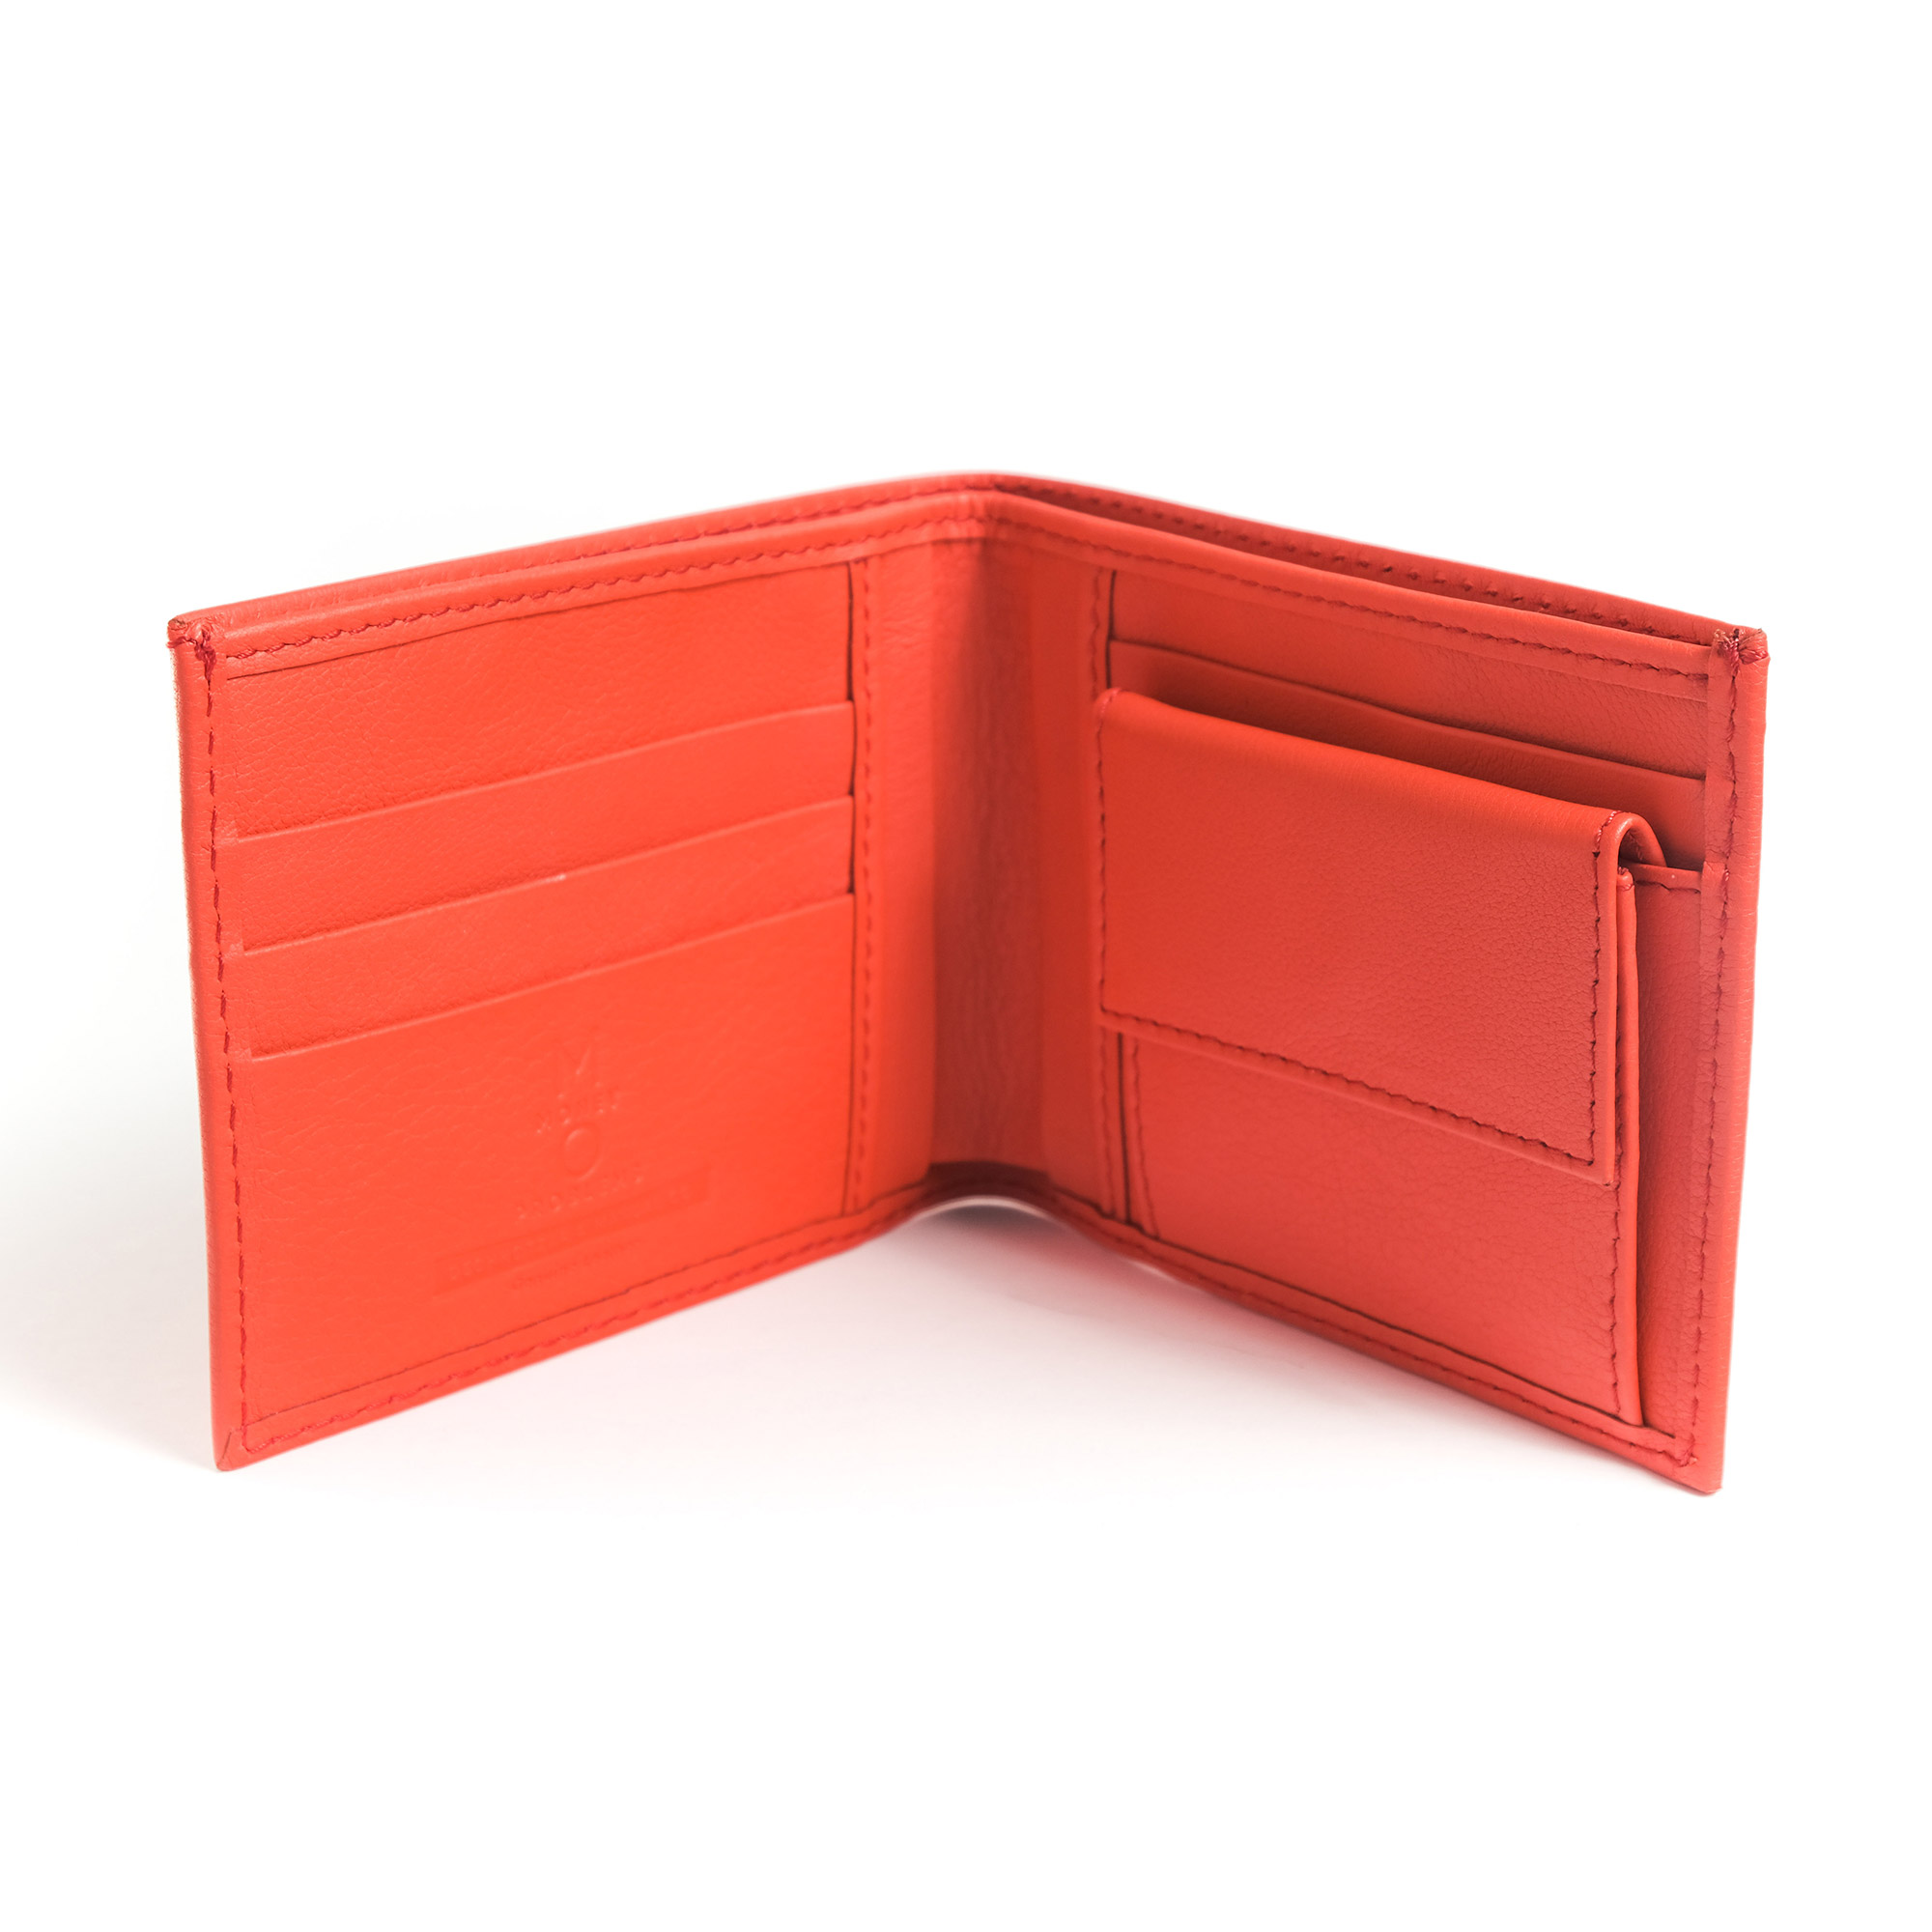 Citza, coral red leather wallet – DechkoTzar